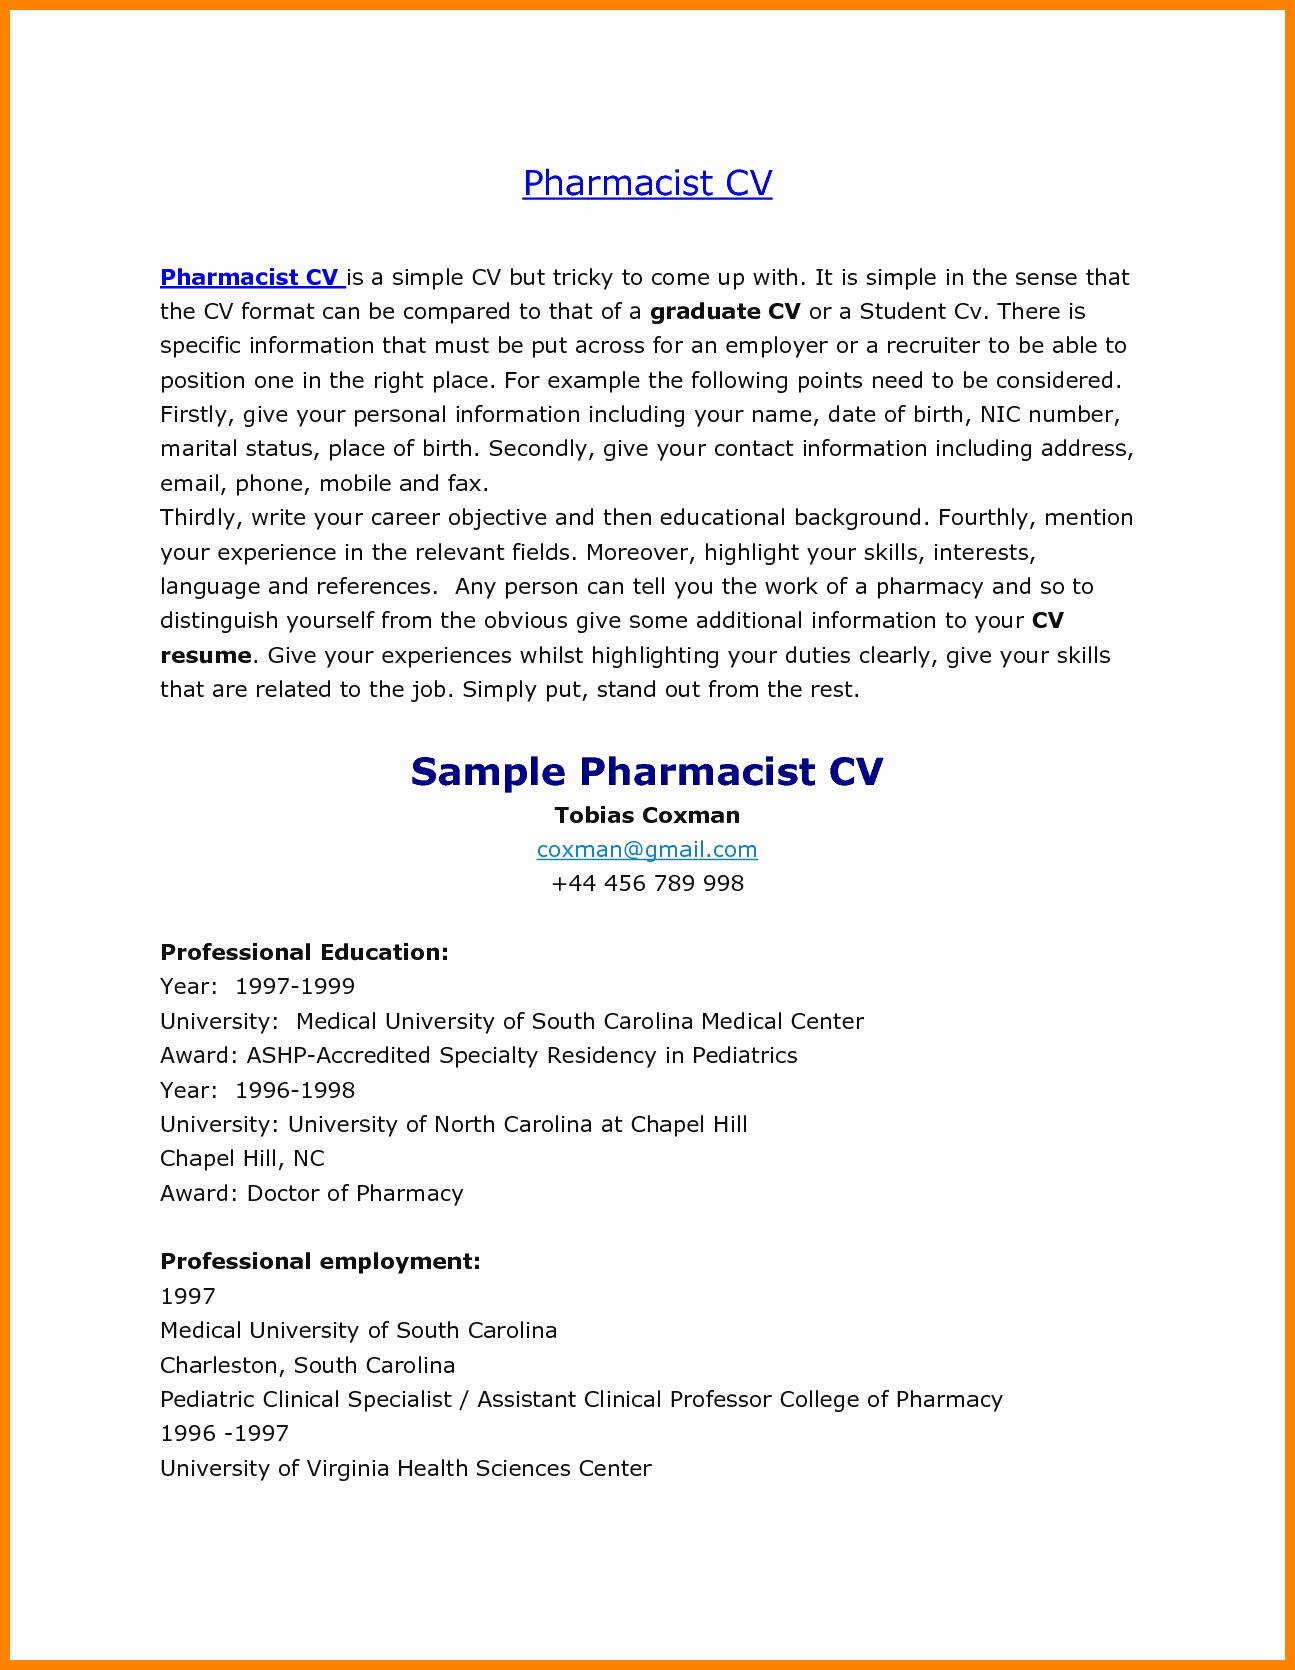 Pharmacist Curriculum Vitae Template Fresh 6 Cv Samples for Pharmacists